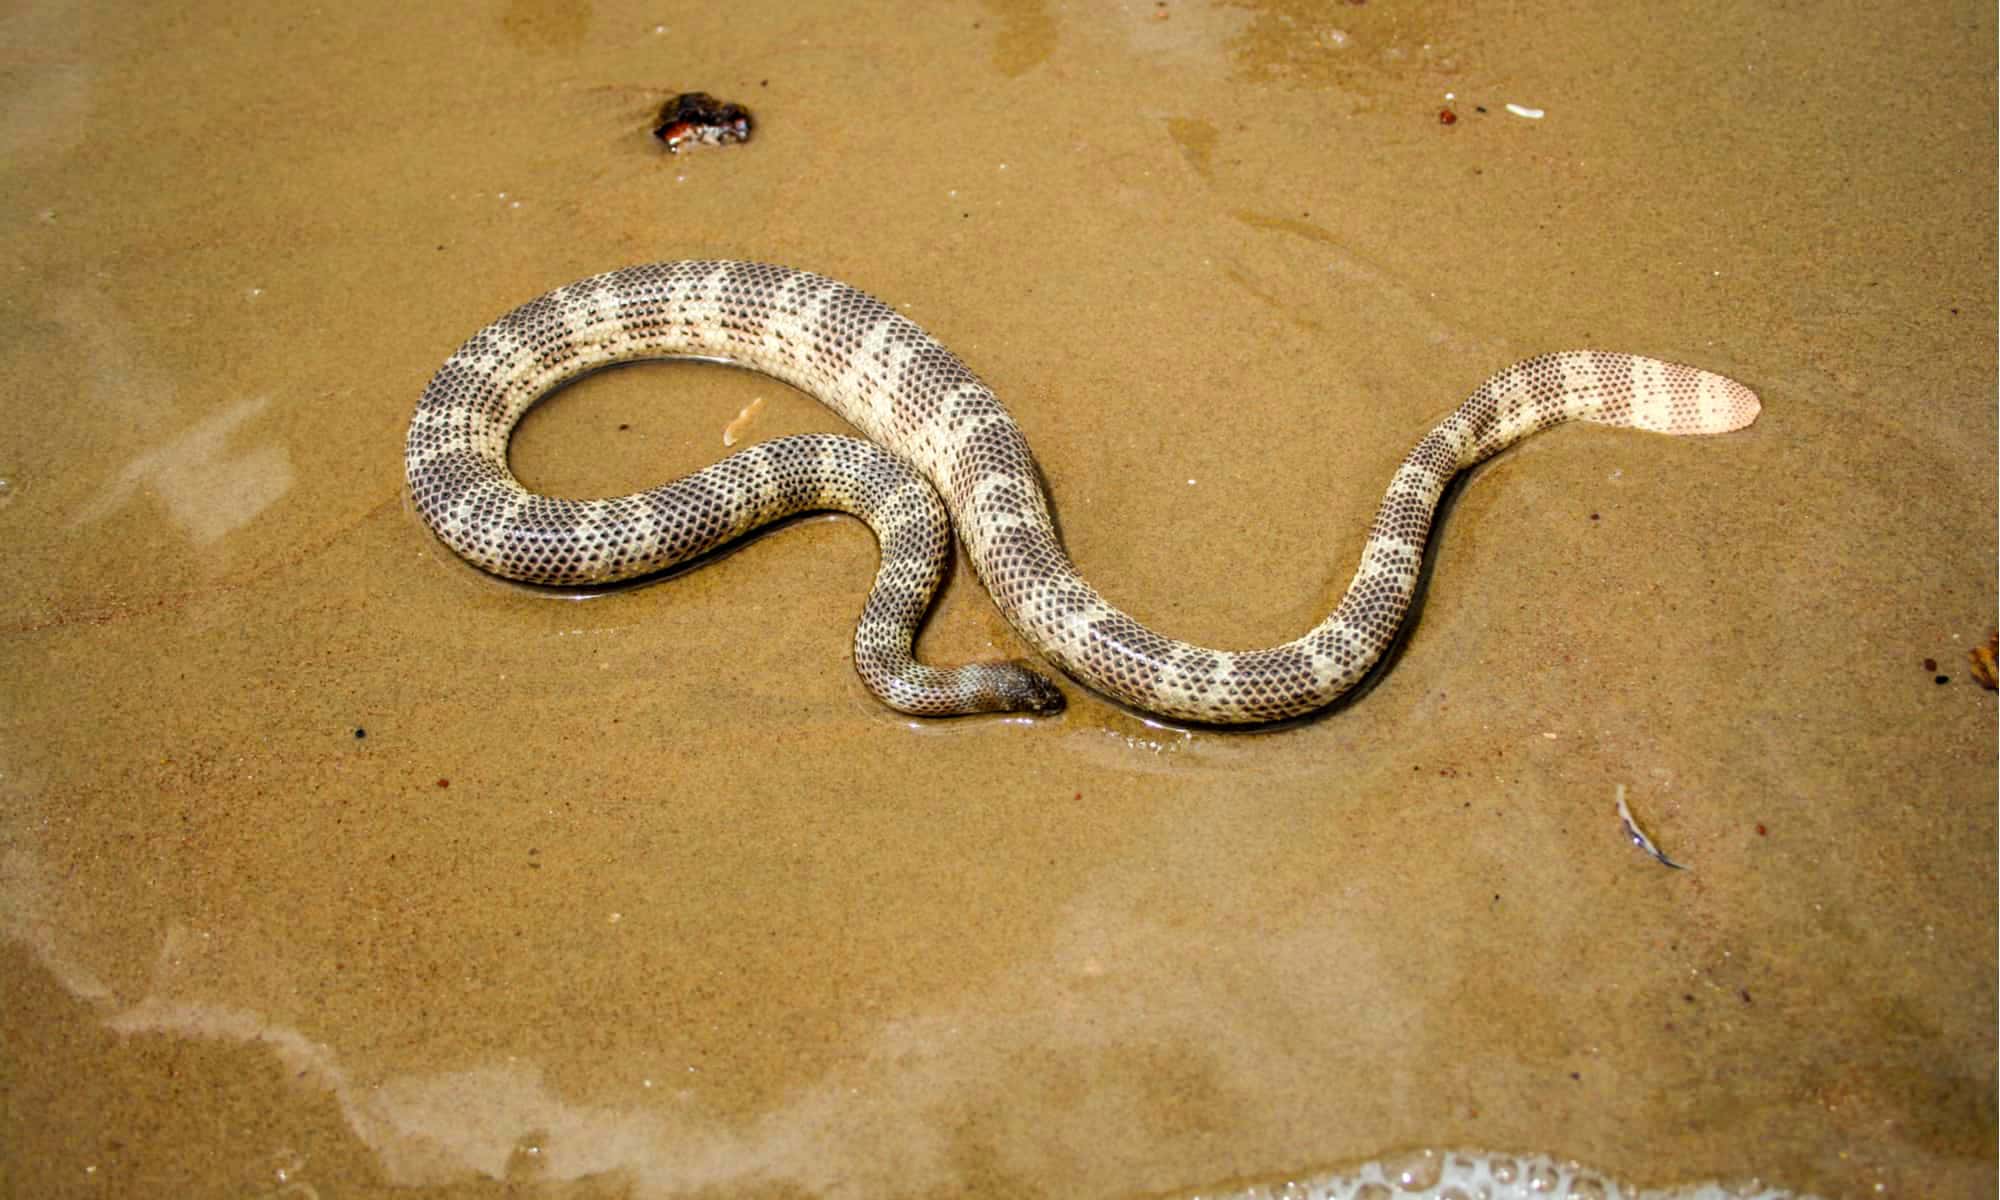 Most Venomous Snakes in the World - Dubois’s Reef Sea Snake